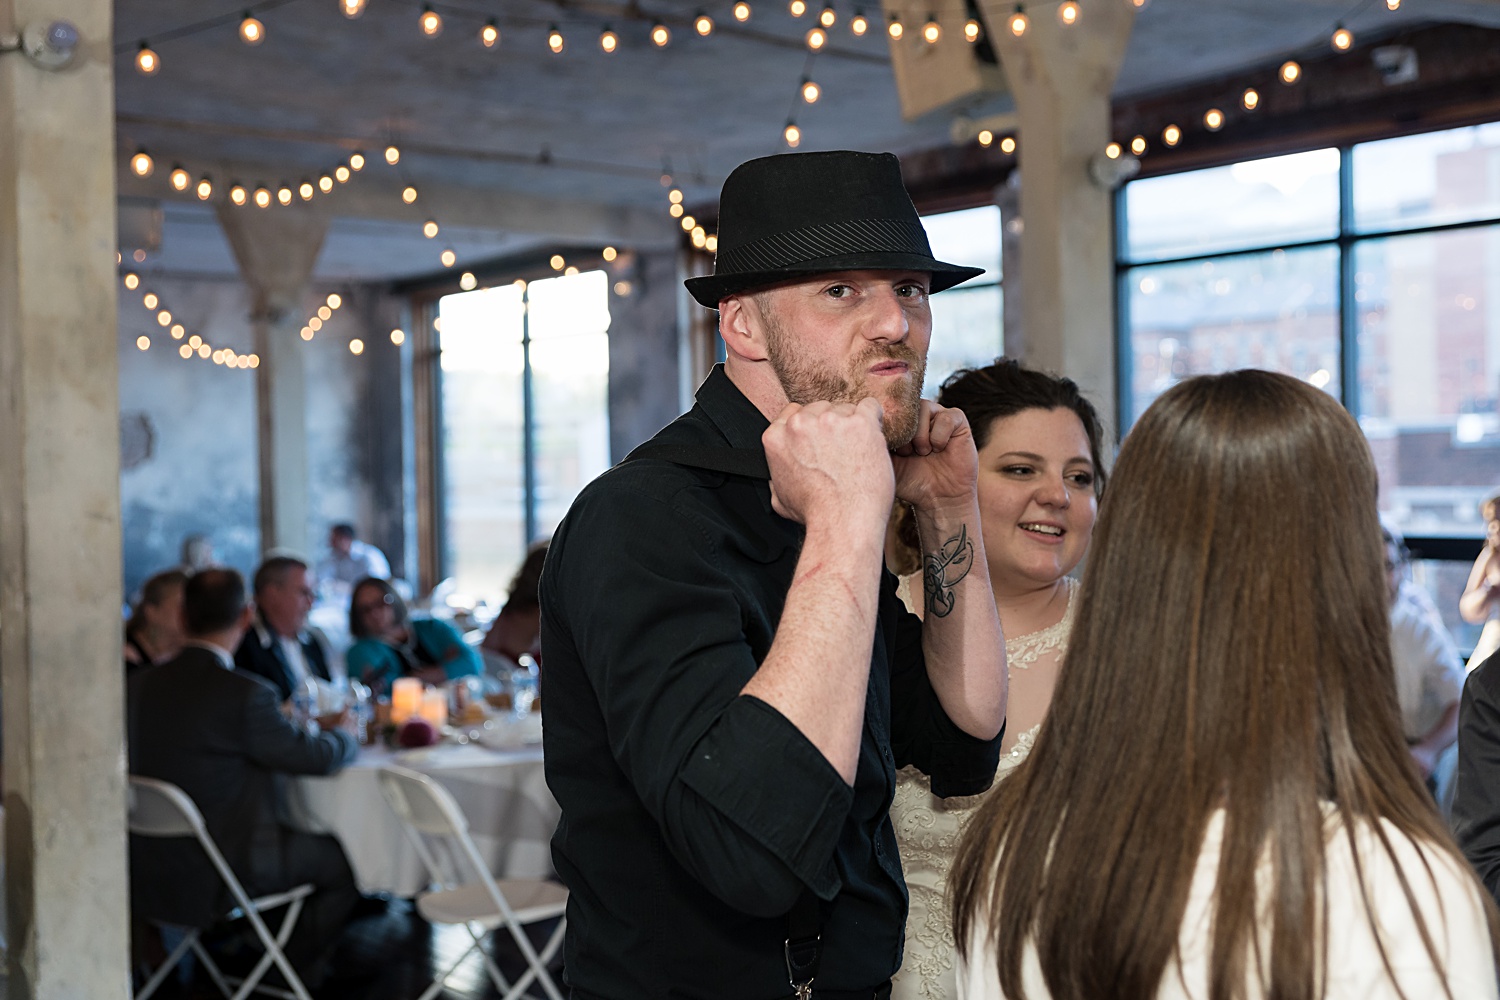 Dancing-Photos-at-the-Reception-The-Bride-and-Bauer-Kansas-City-Wedding-Photographer-Emily-Lynn-Photography